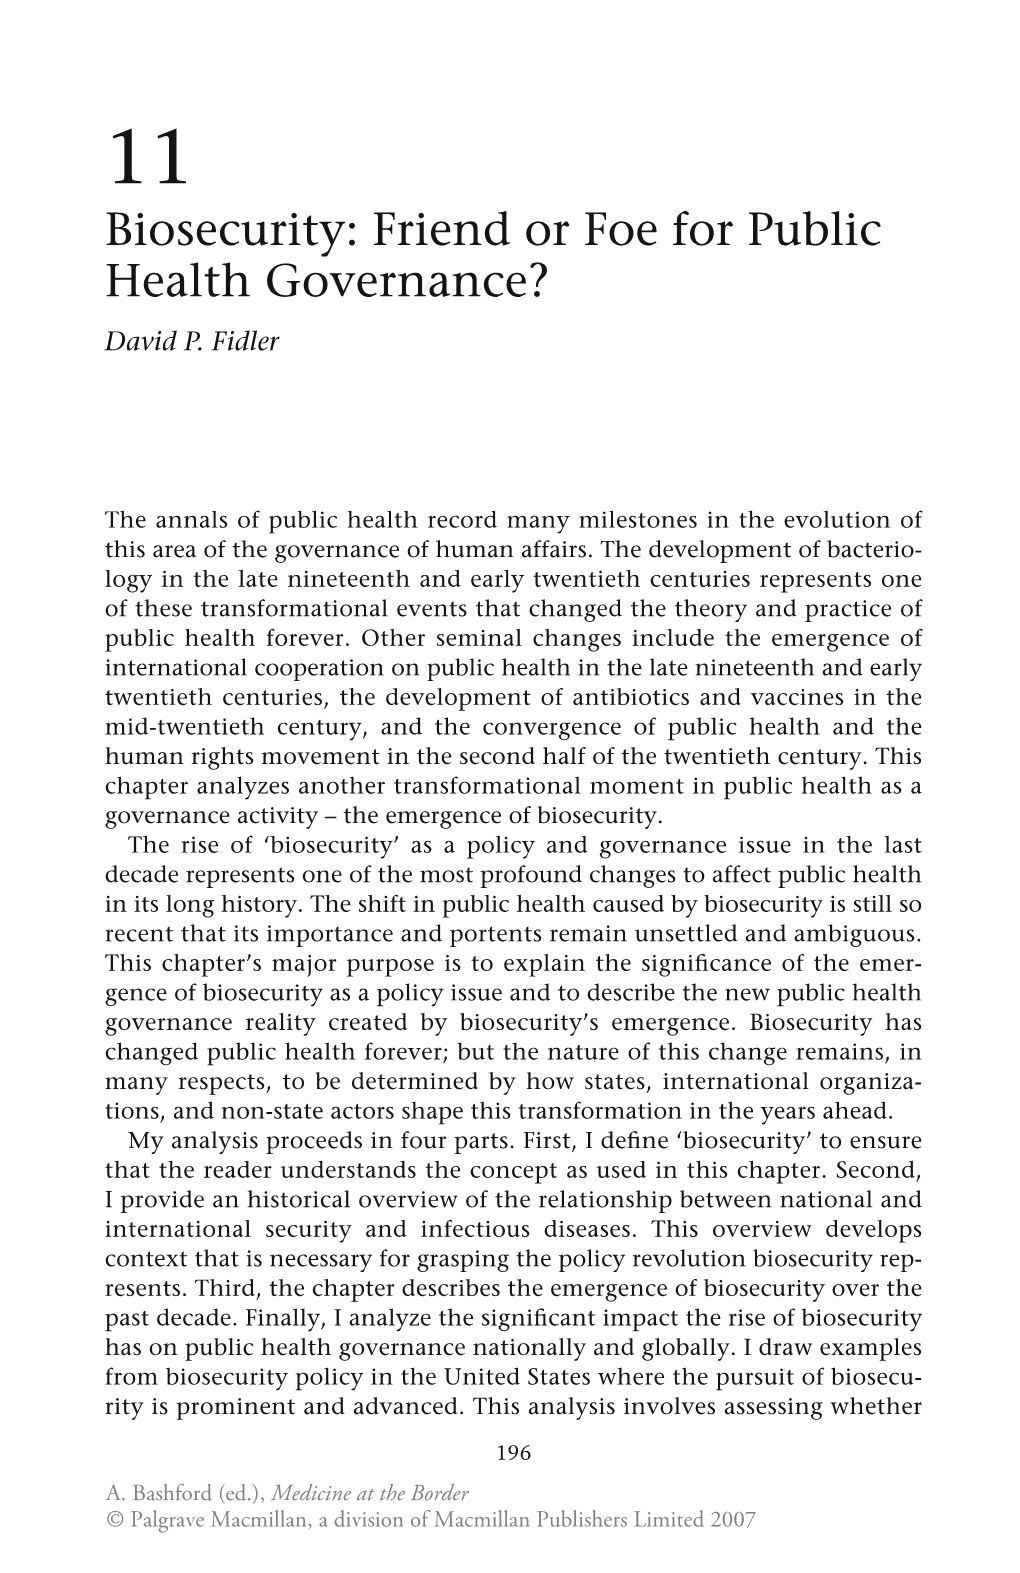 Biosecurity: Friend Or Foe for Public Health Governance? David P